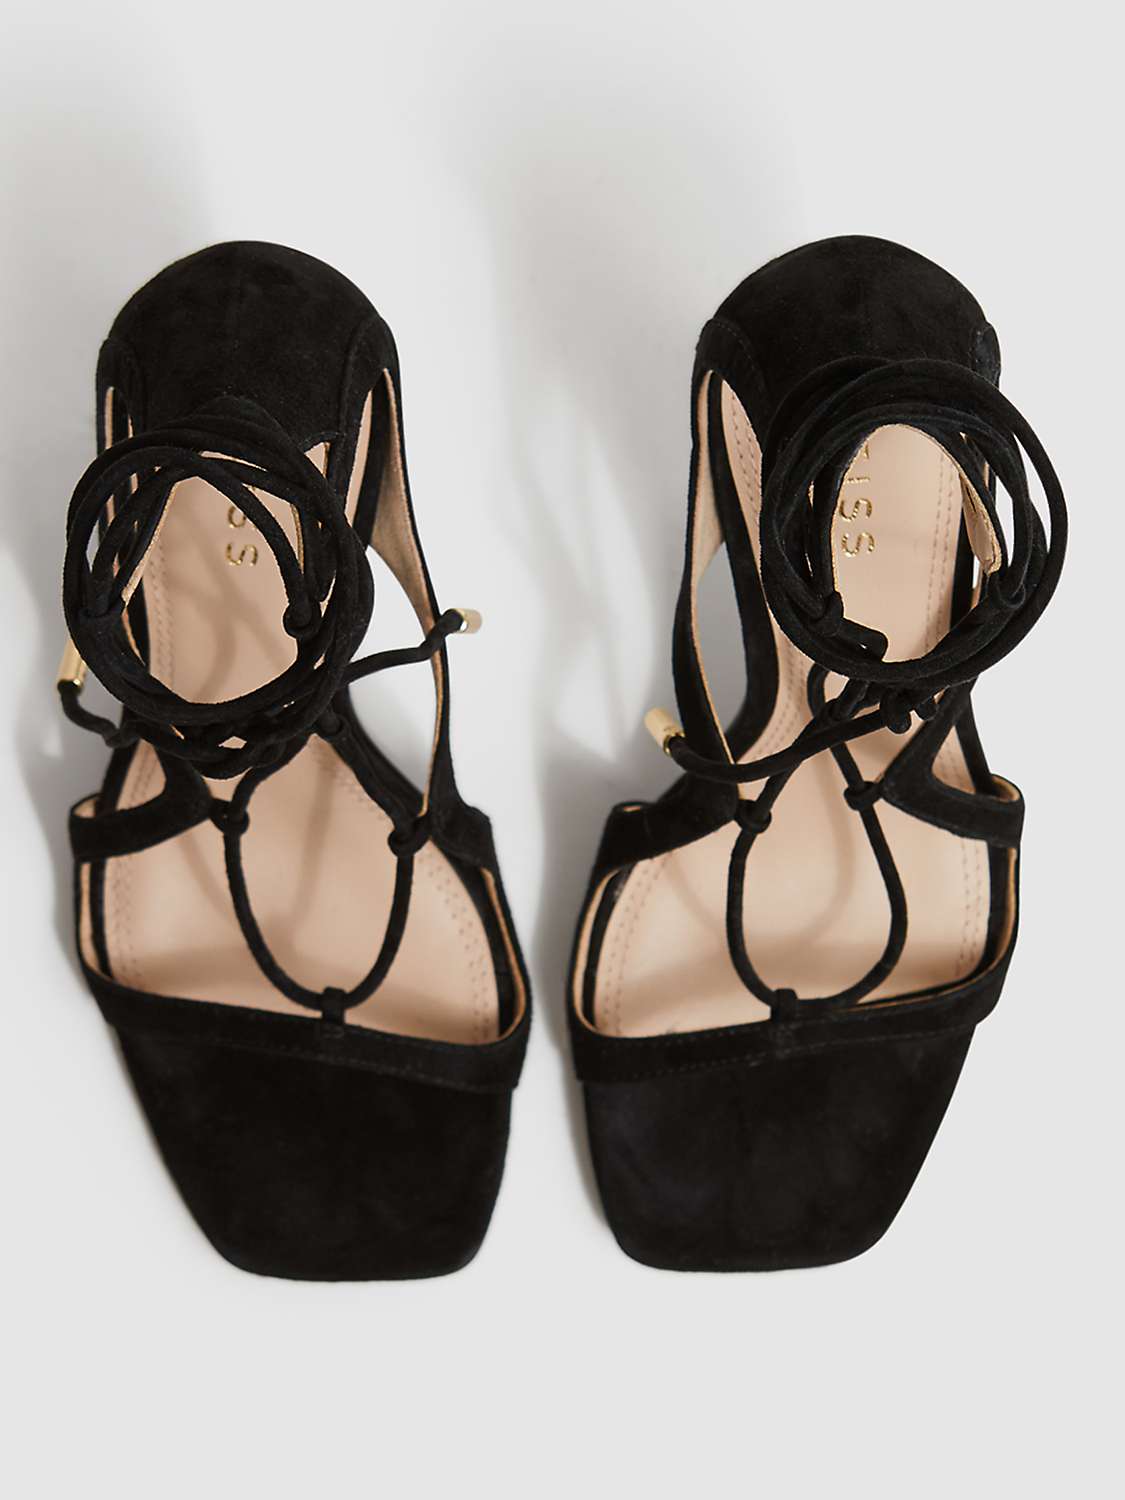 Buy Reiss Kate Cross Strap High Heel Suede Sandals, Black Online at johnlewis.com